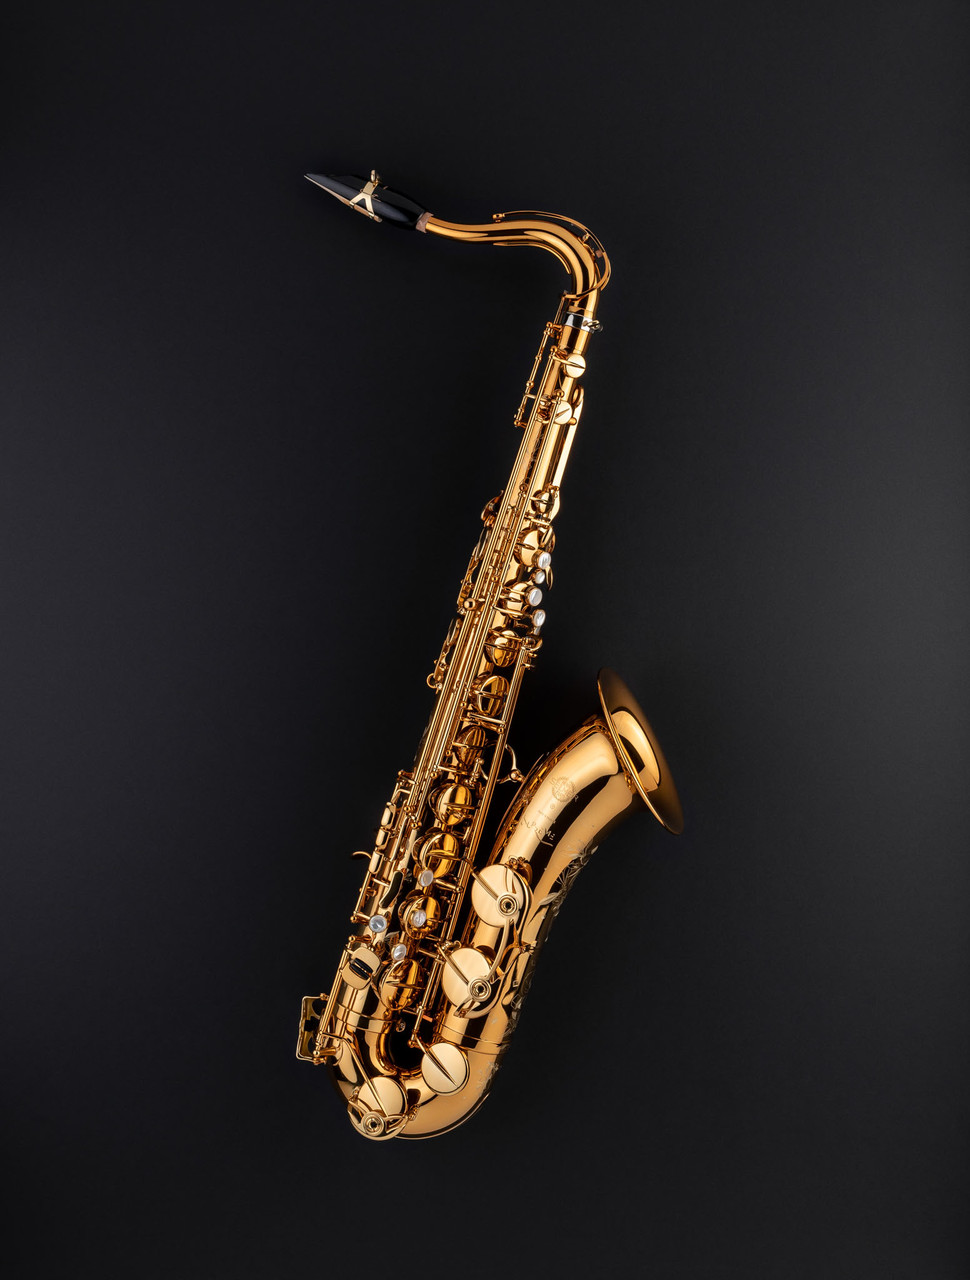 Tenor Saxophones - The World's Leading Saxophone Specialist